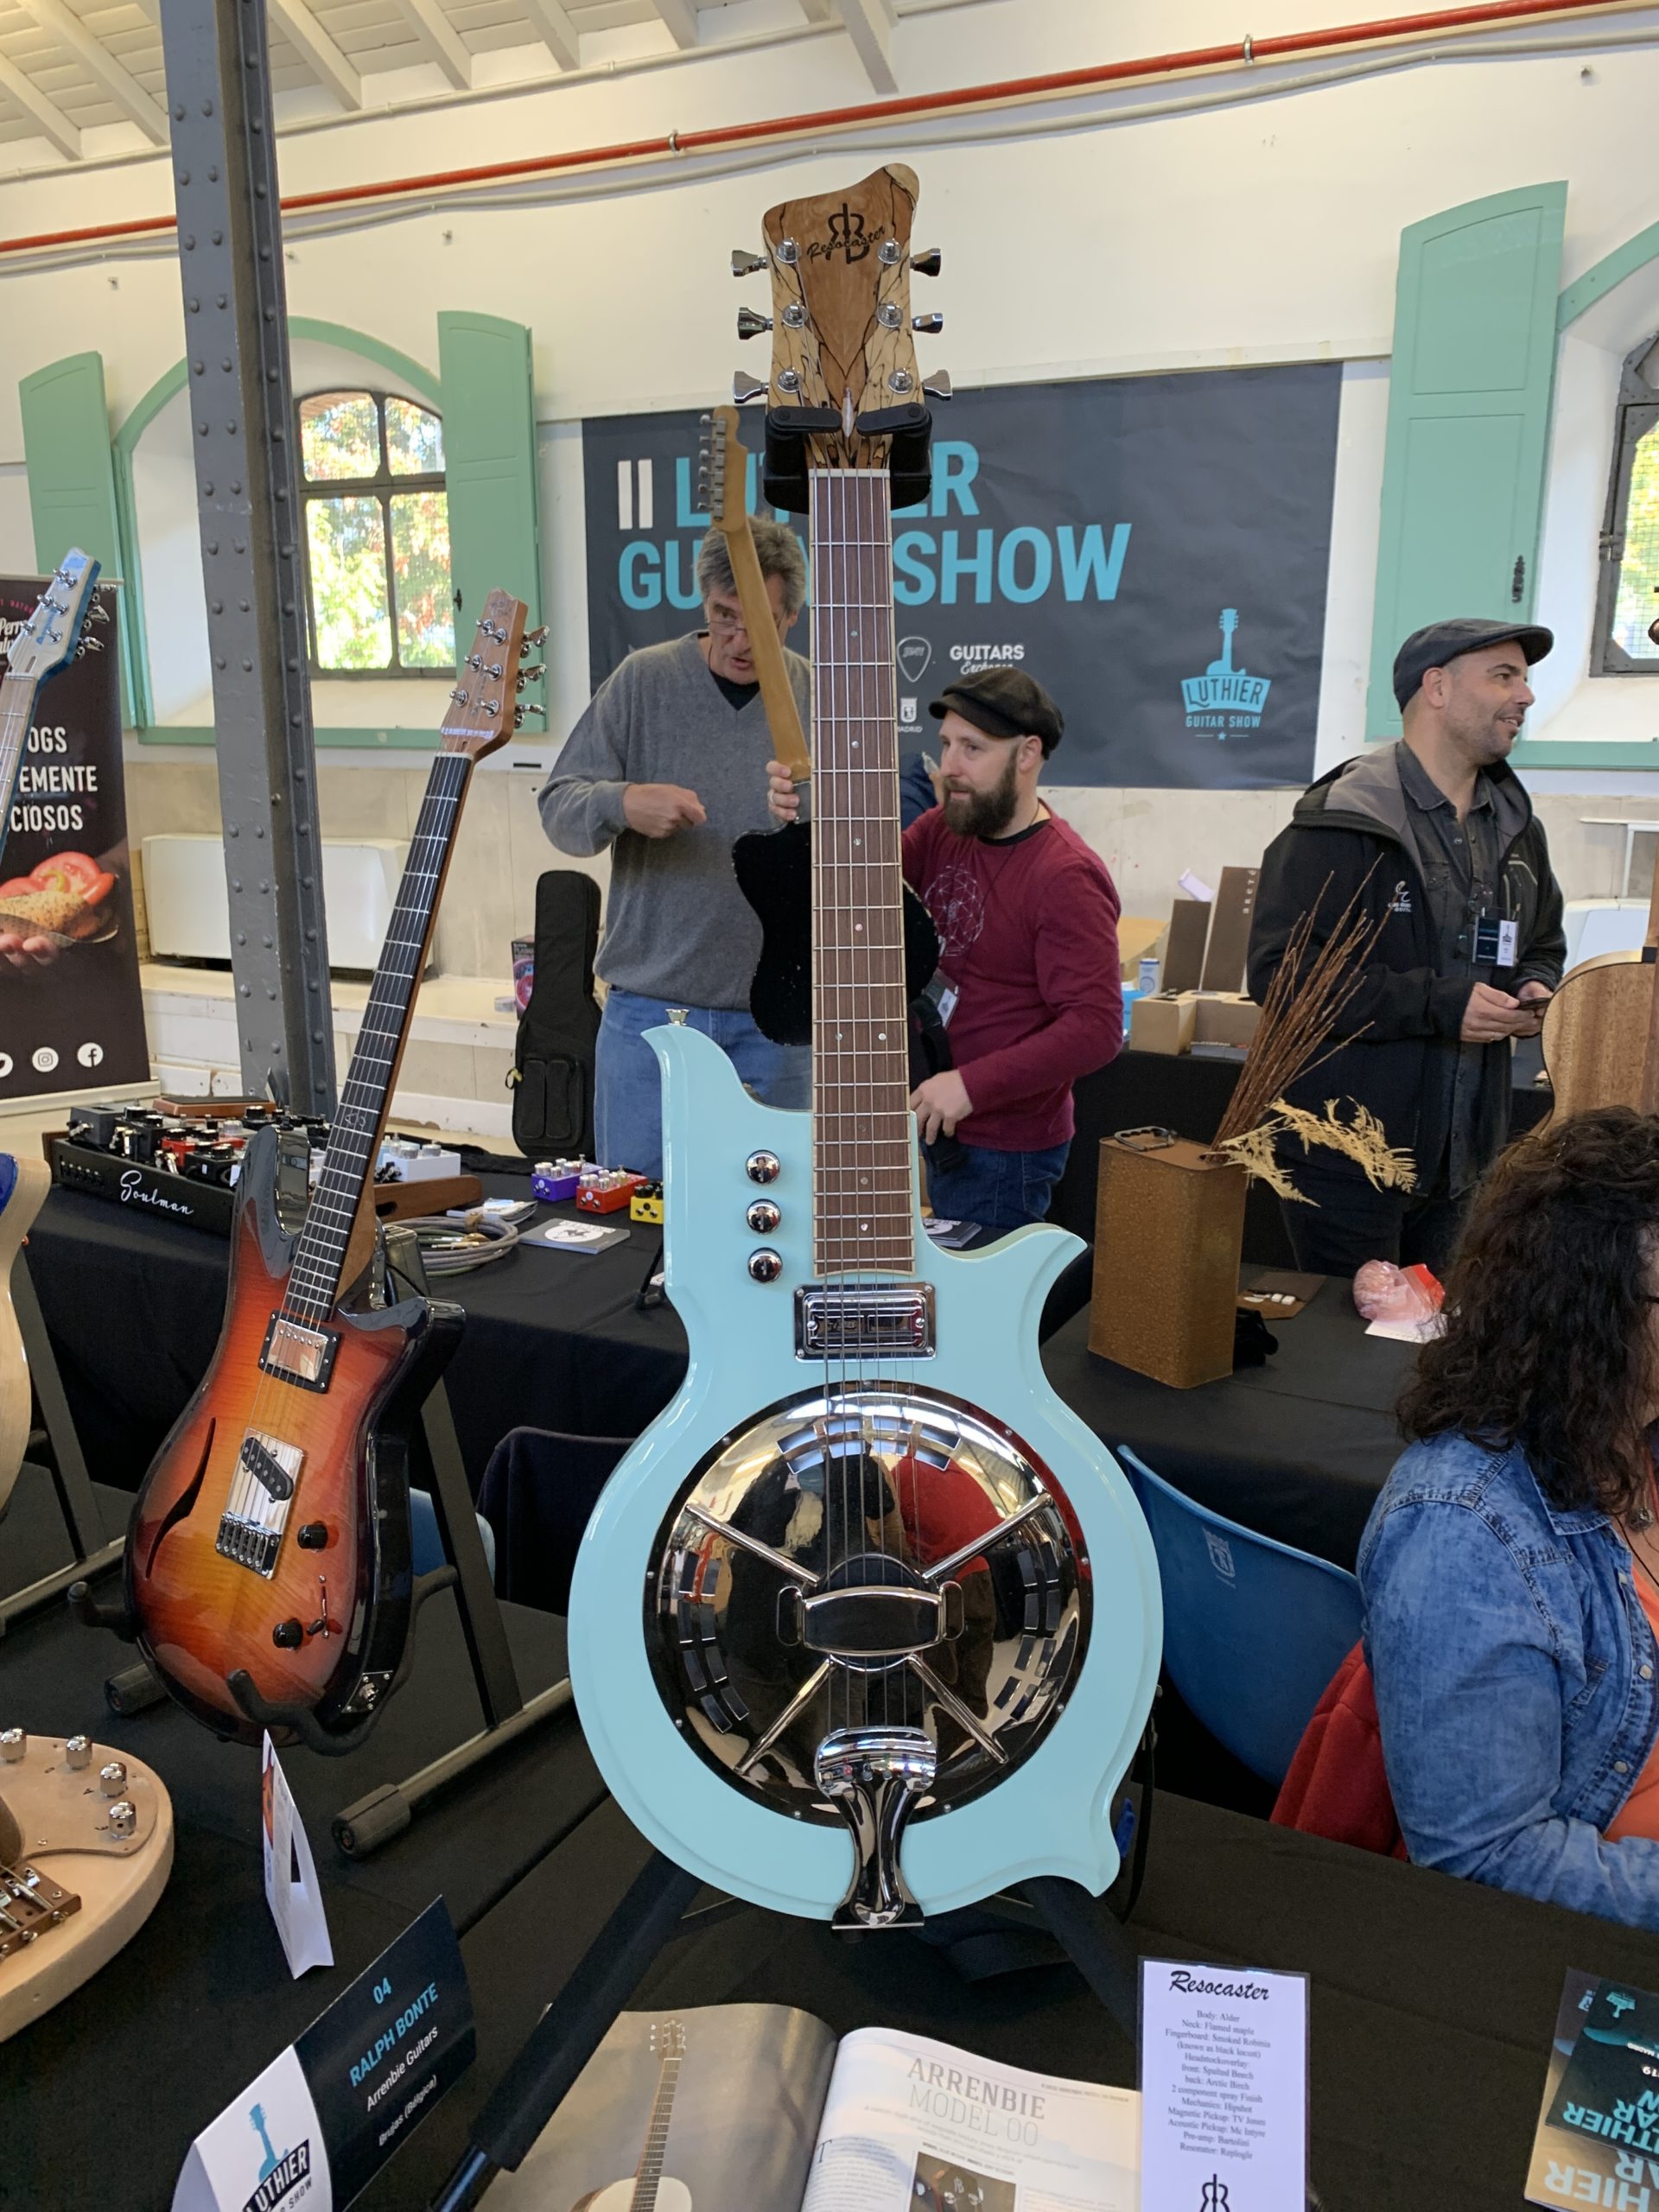 Ralph Bonte luthier interview - Arrenbie Guitars at the 2019 Madrid guitar show